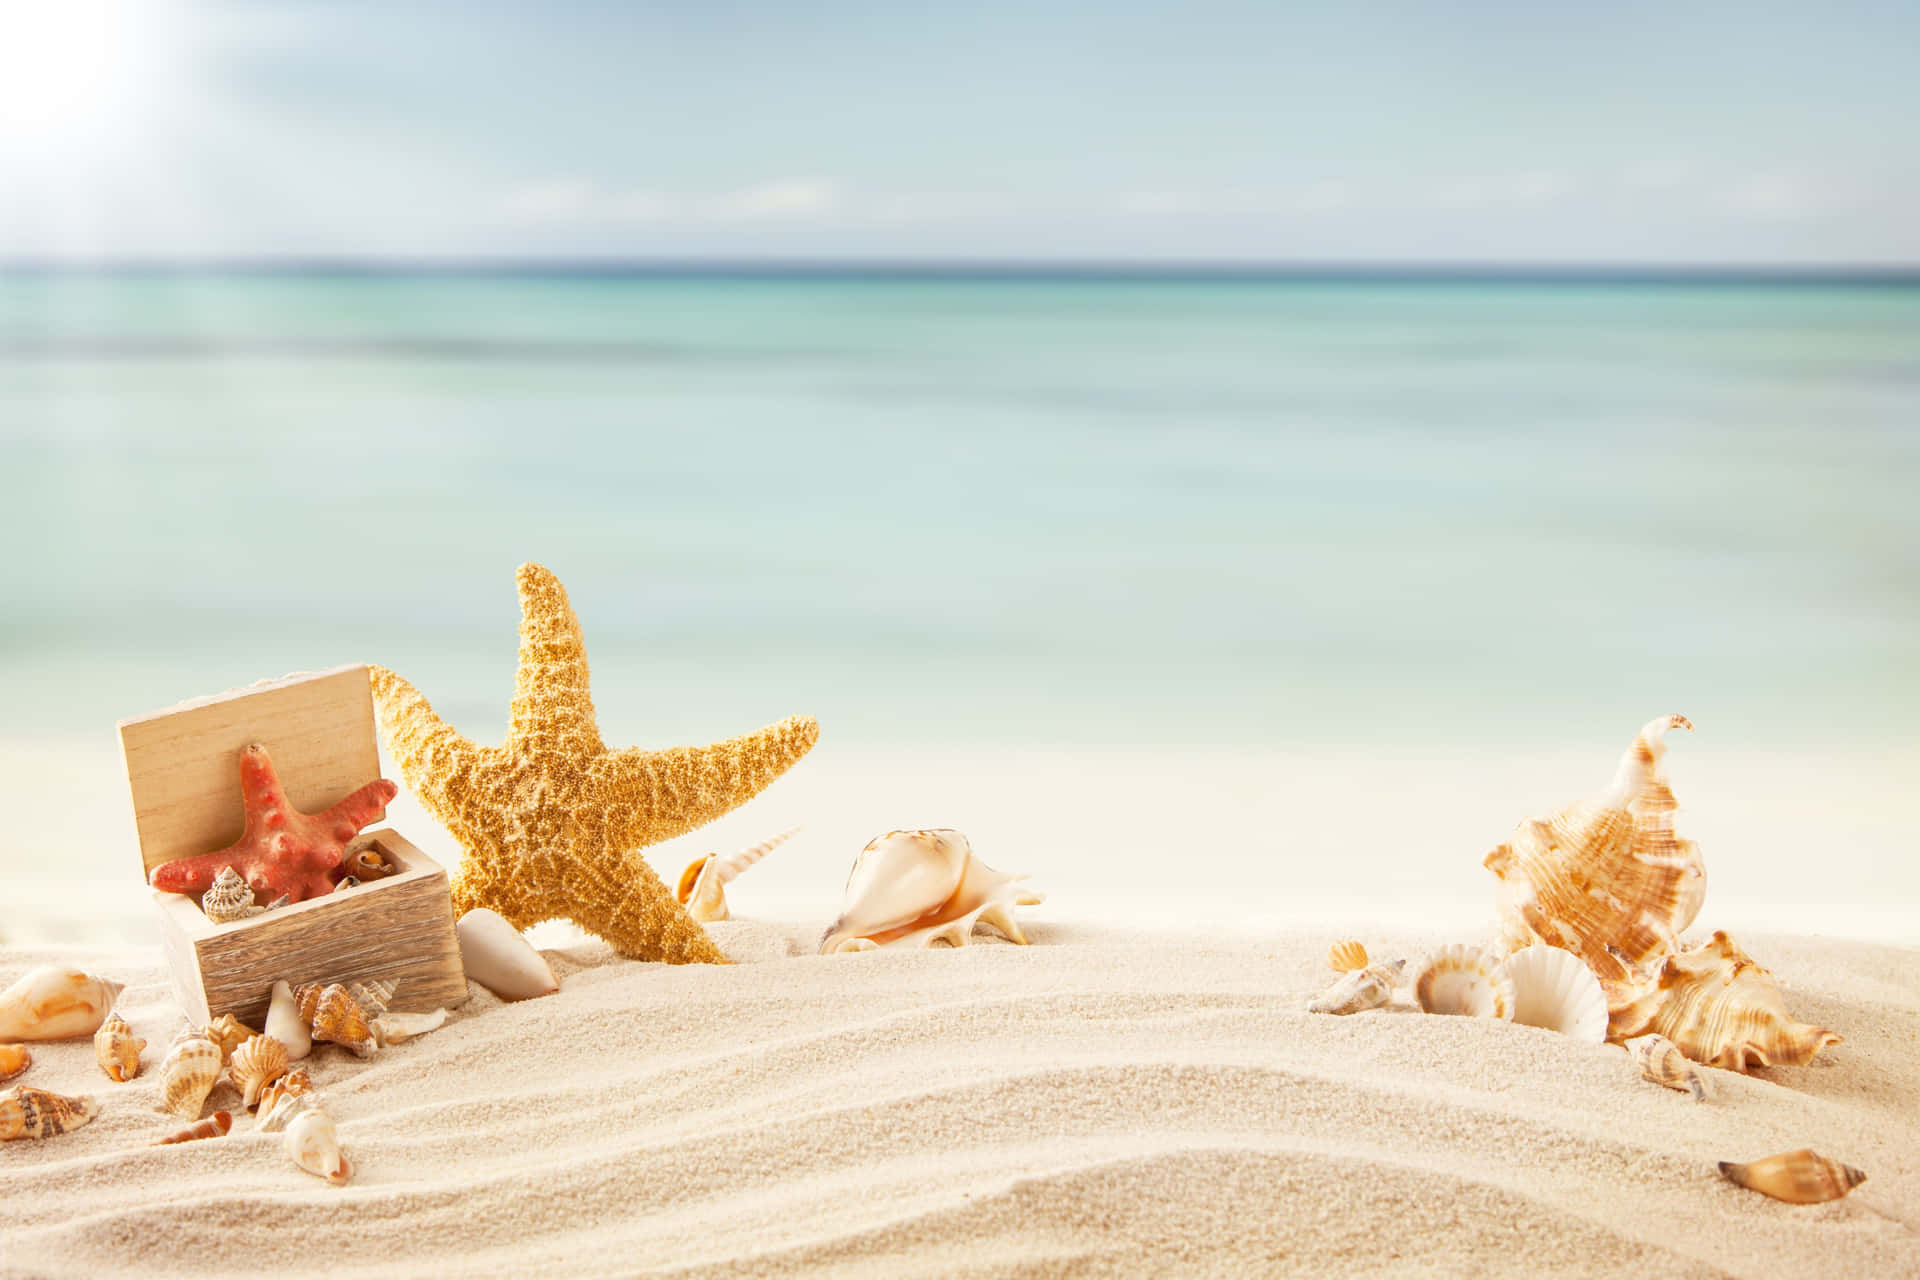 Stunning Seashell Close-Up on Beach Sands